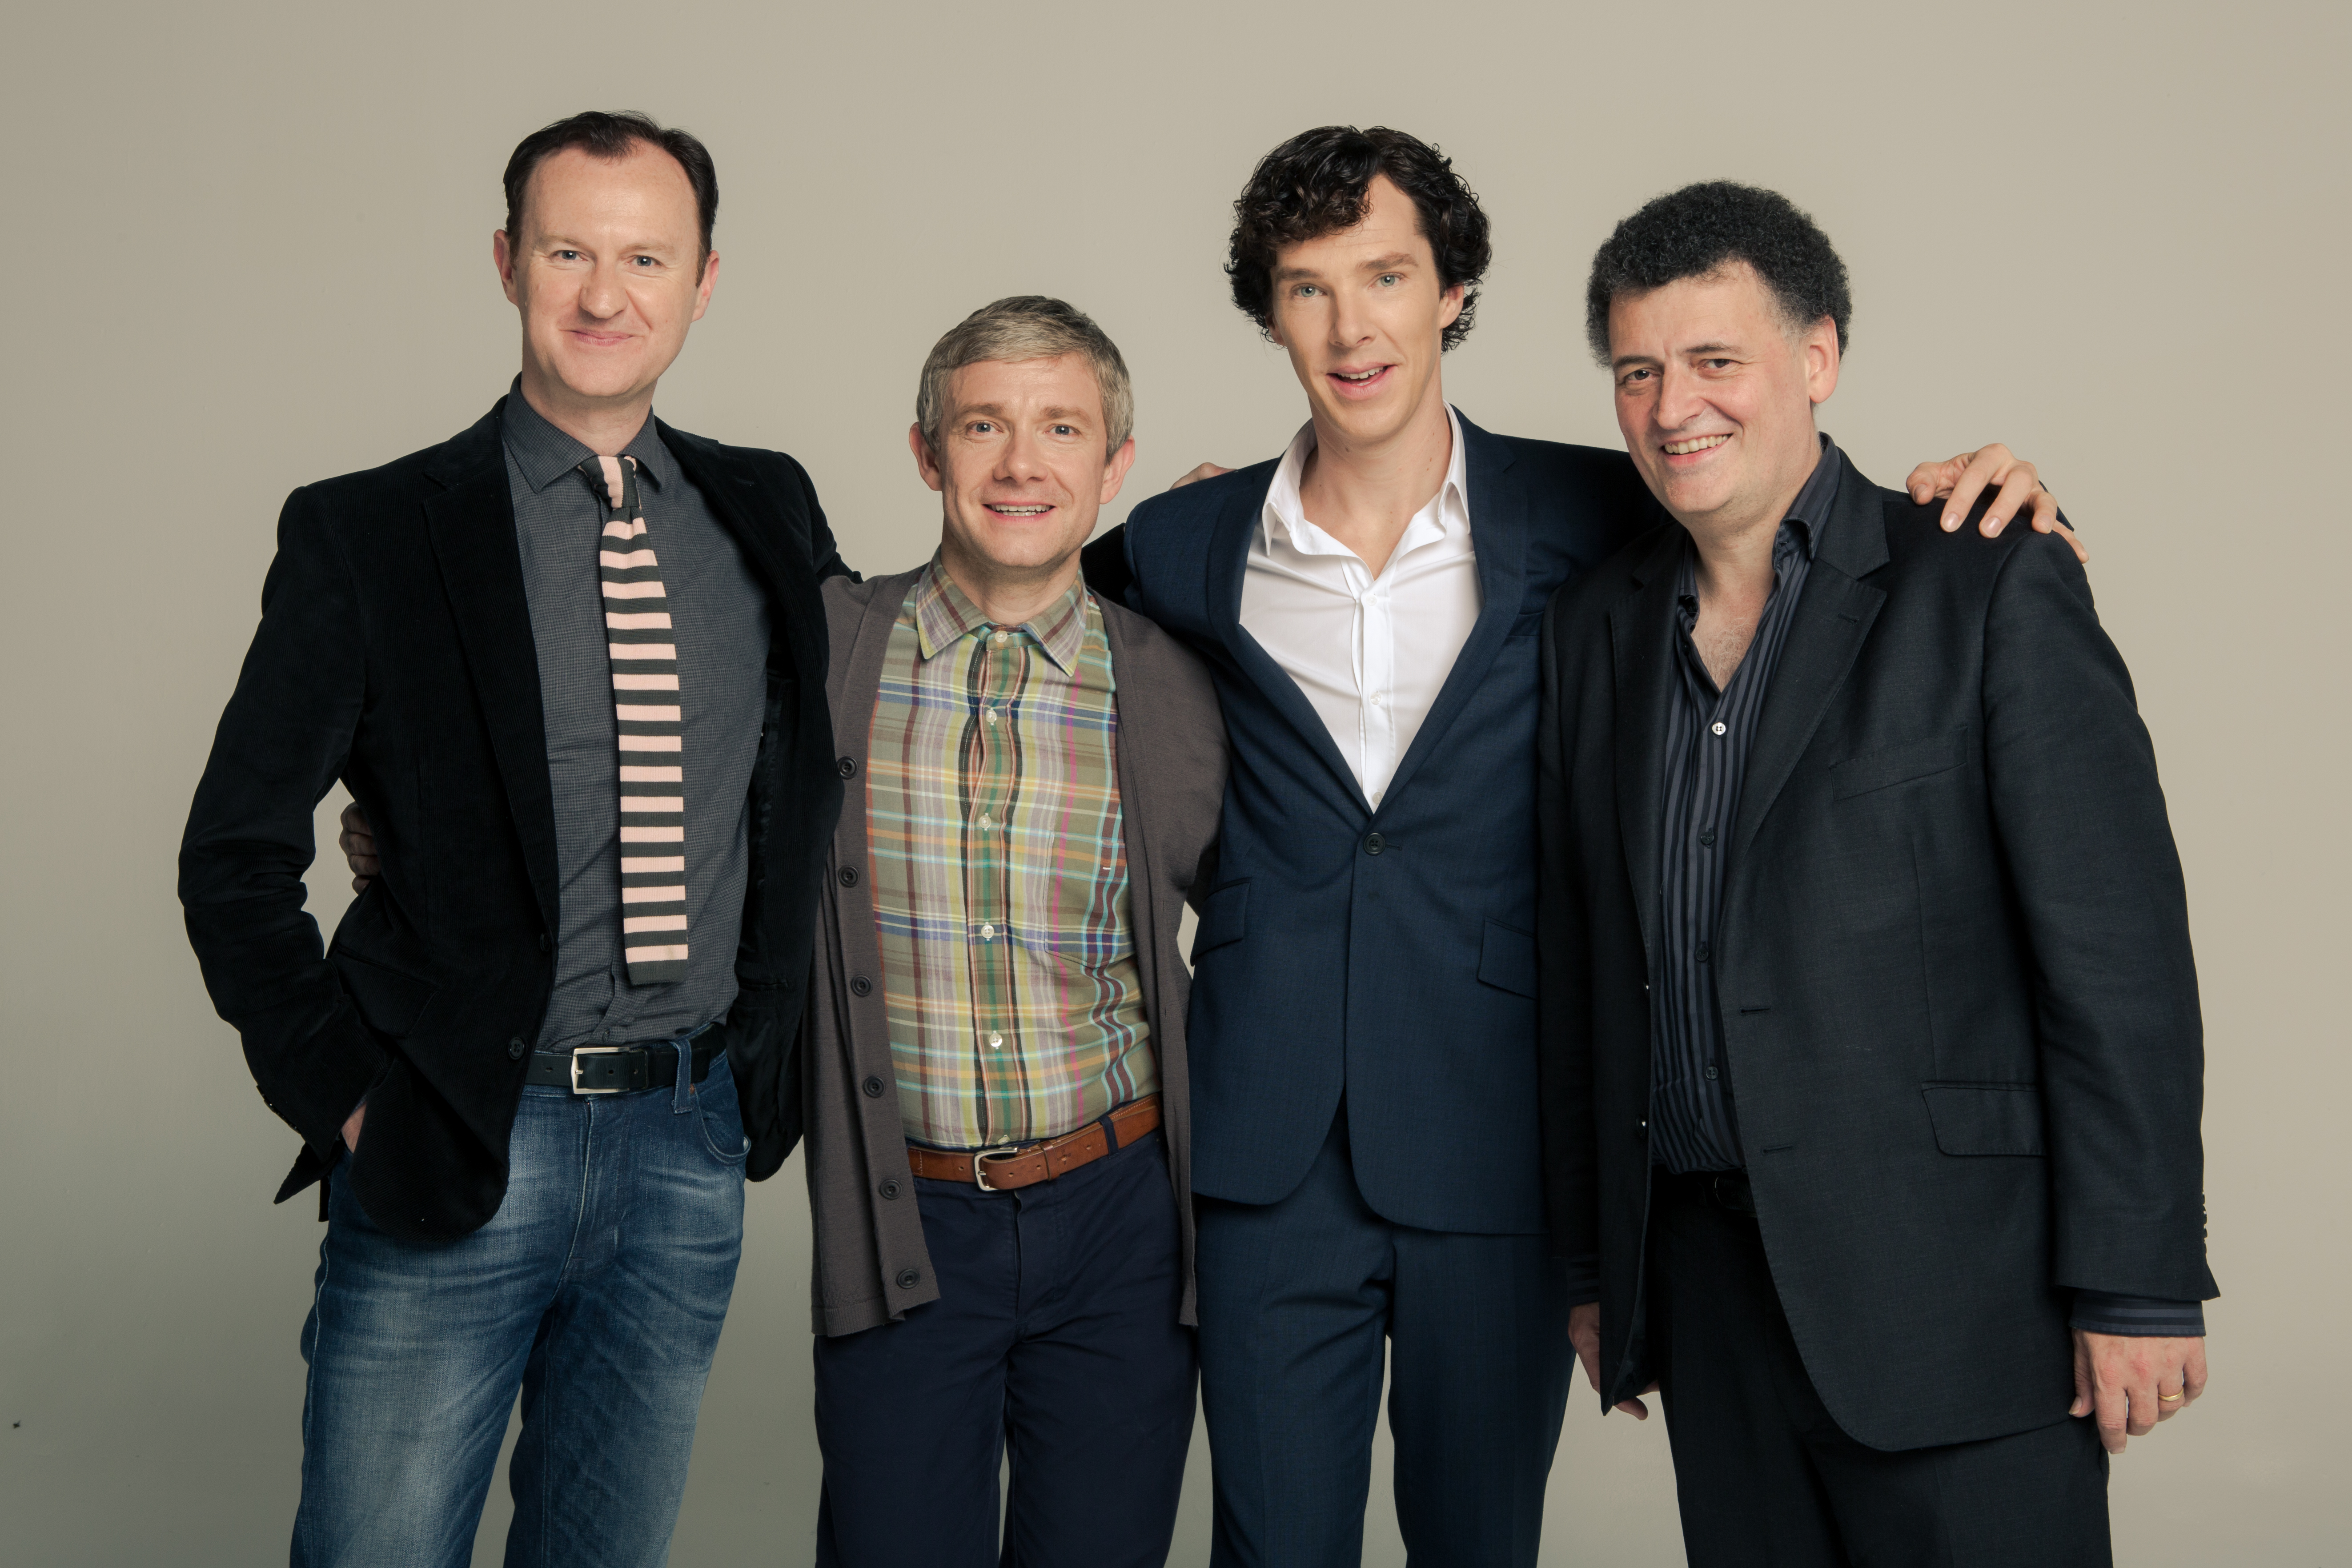 Mark Gatiss, Matin Freeman, Benedict Cumberbatch and Steven Moffat (Photo: Courtesy of Robert Viglasky © Hartswood Films)